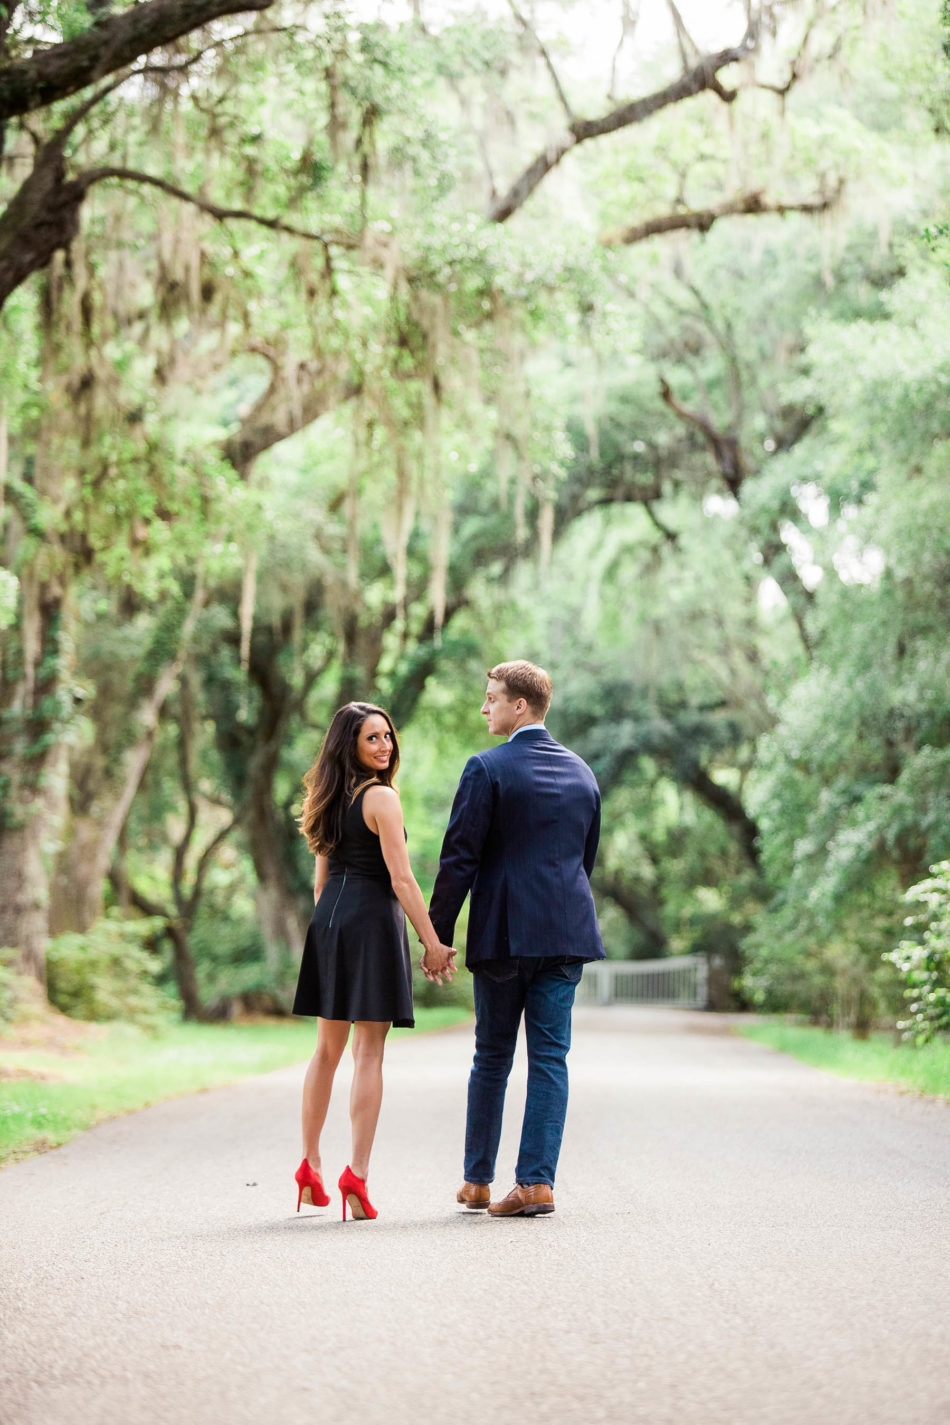 Engaged couple walks down road to the Avenue of Oaks, Magnolia Plantation, Charleston, South Carolina. Kate Timbers Photography. http://katetimbers.com